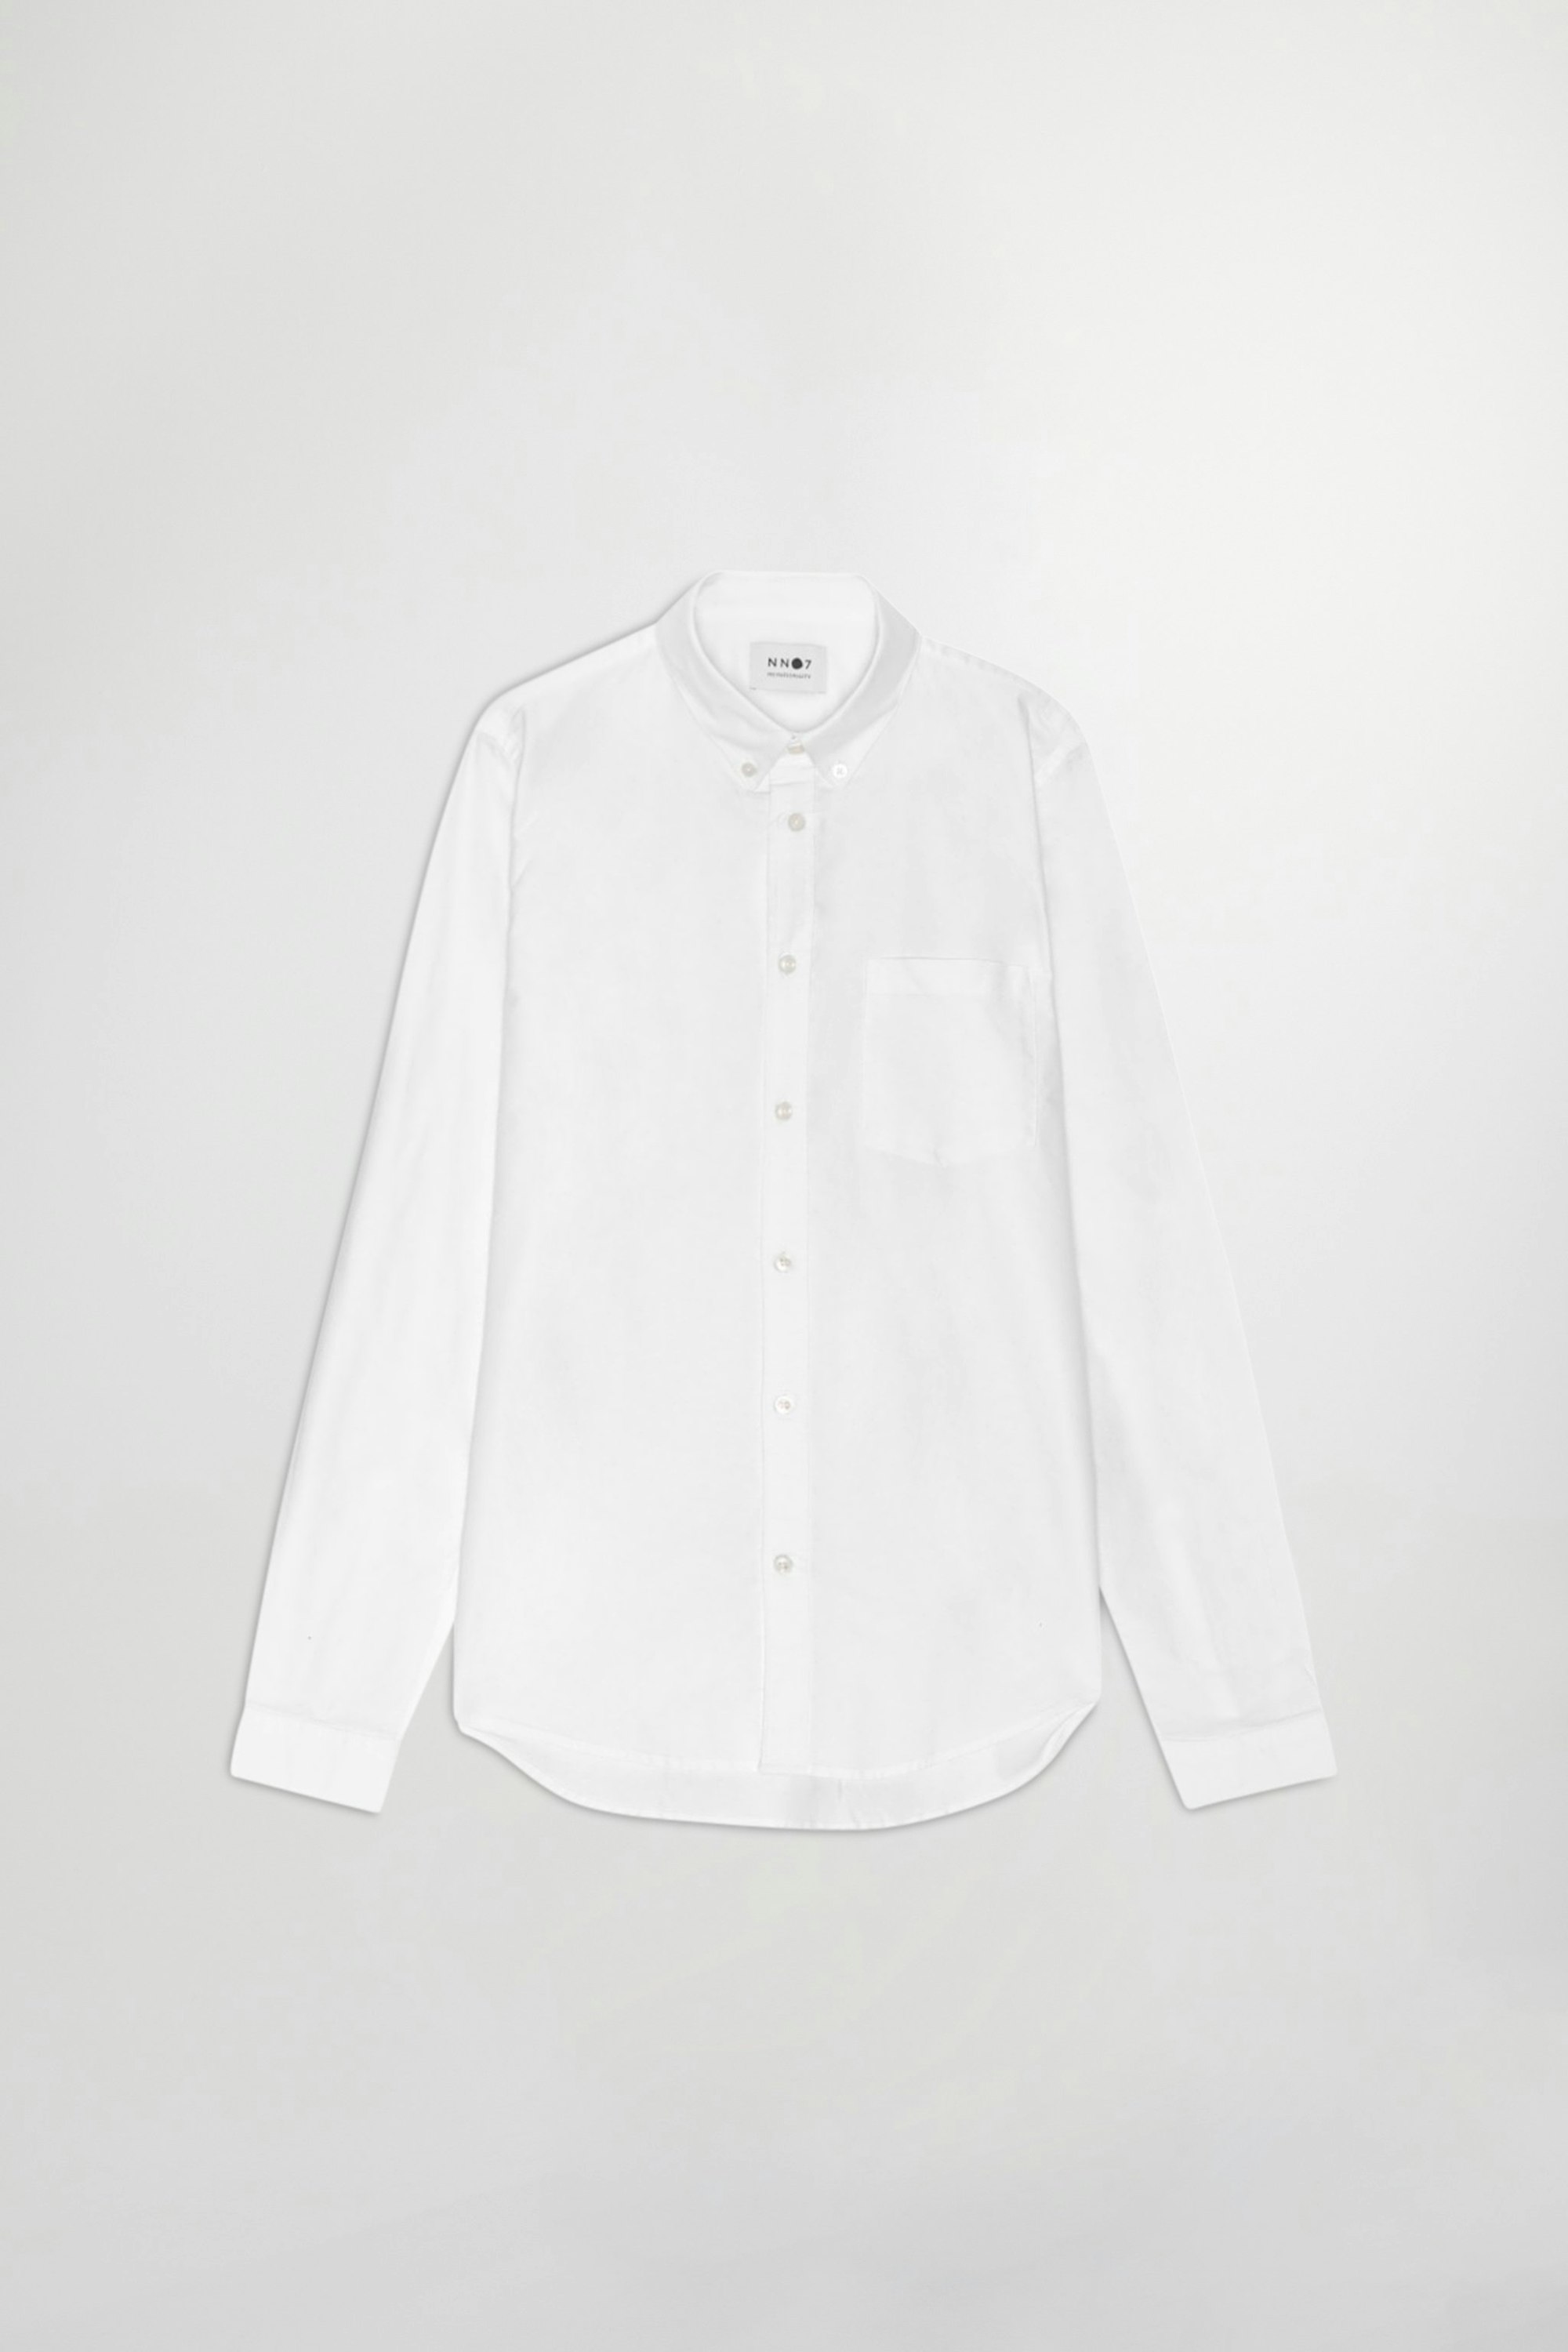 Sixten 5677 men\'s shirt - White - Buy online at